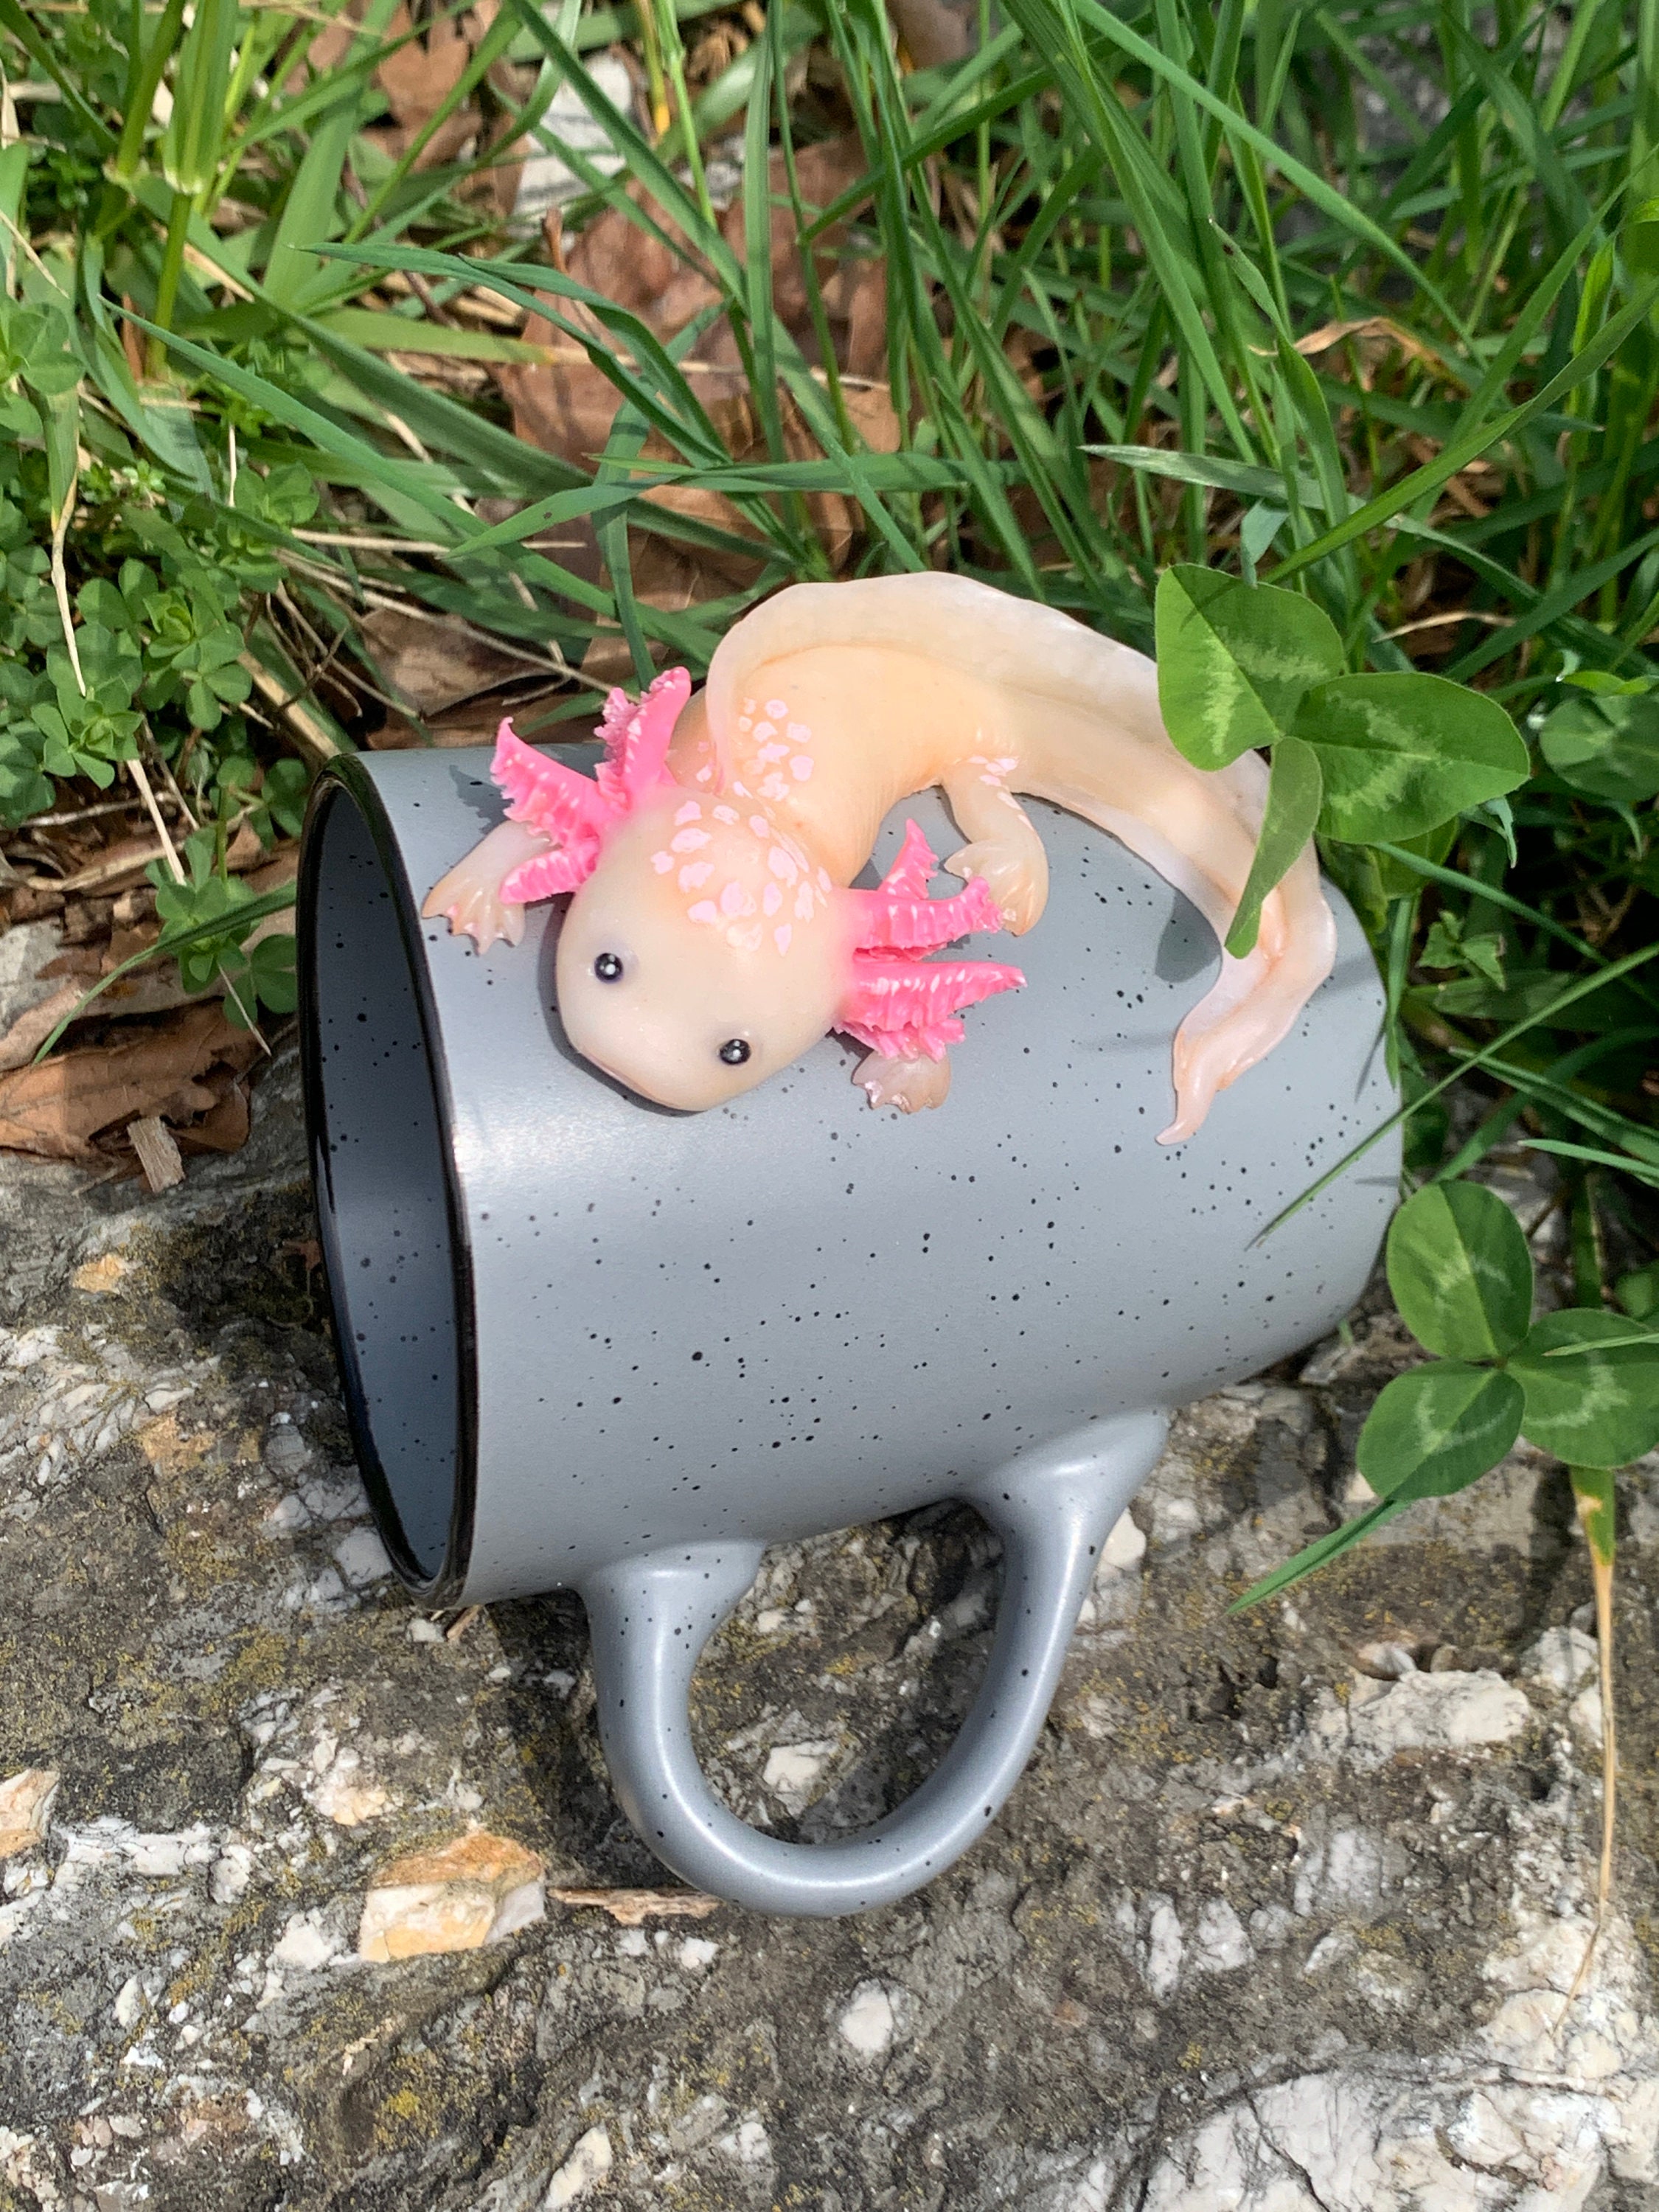 SeeCrab You Axolotl Questions Ceramic Mug, Cute Axolotl Porcelain Teacup  Gift Idea For Pet Lovers, A…See more SeeCrab You Axolotl Questions Ceramic